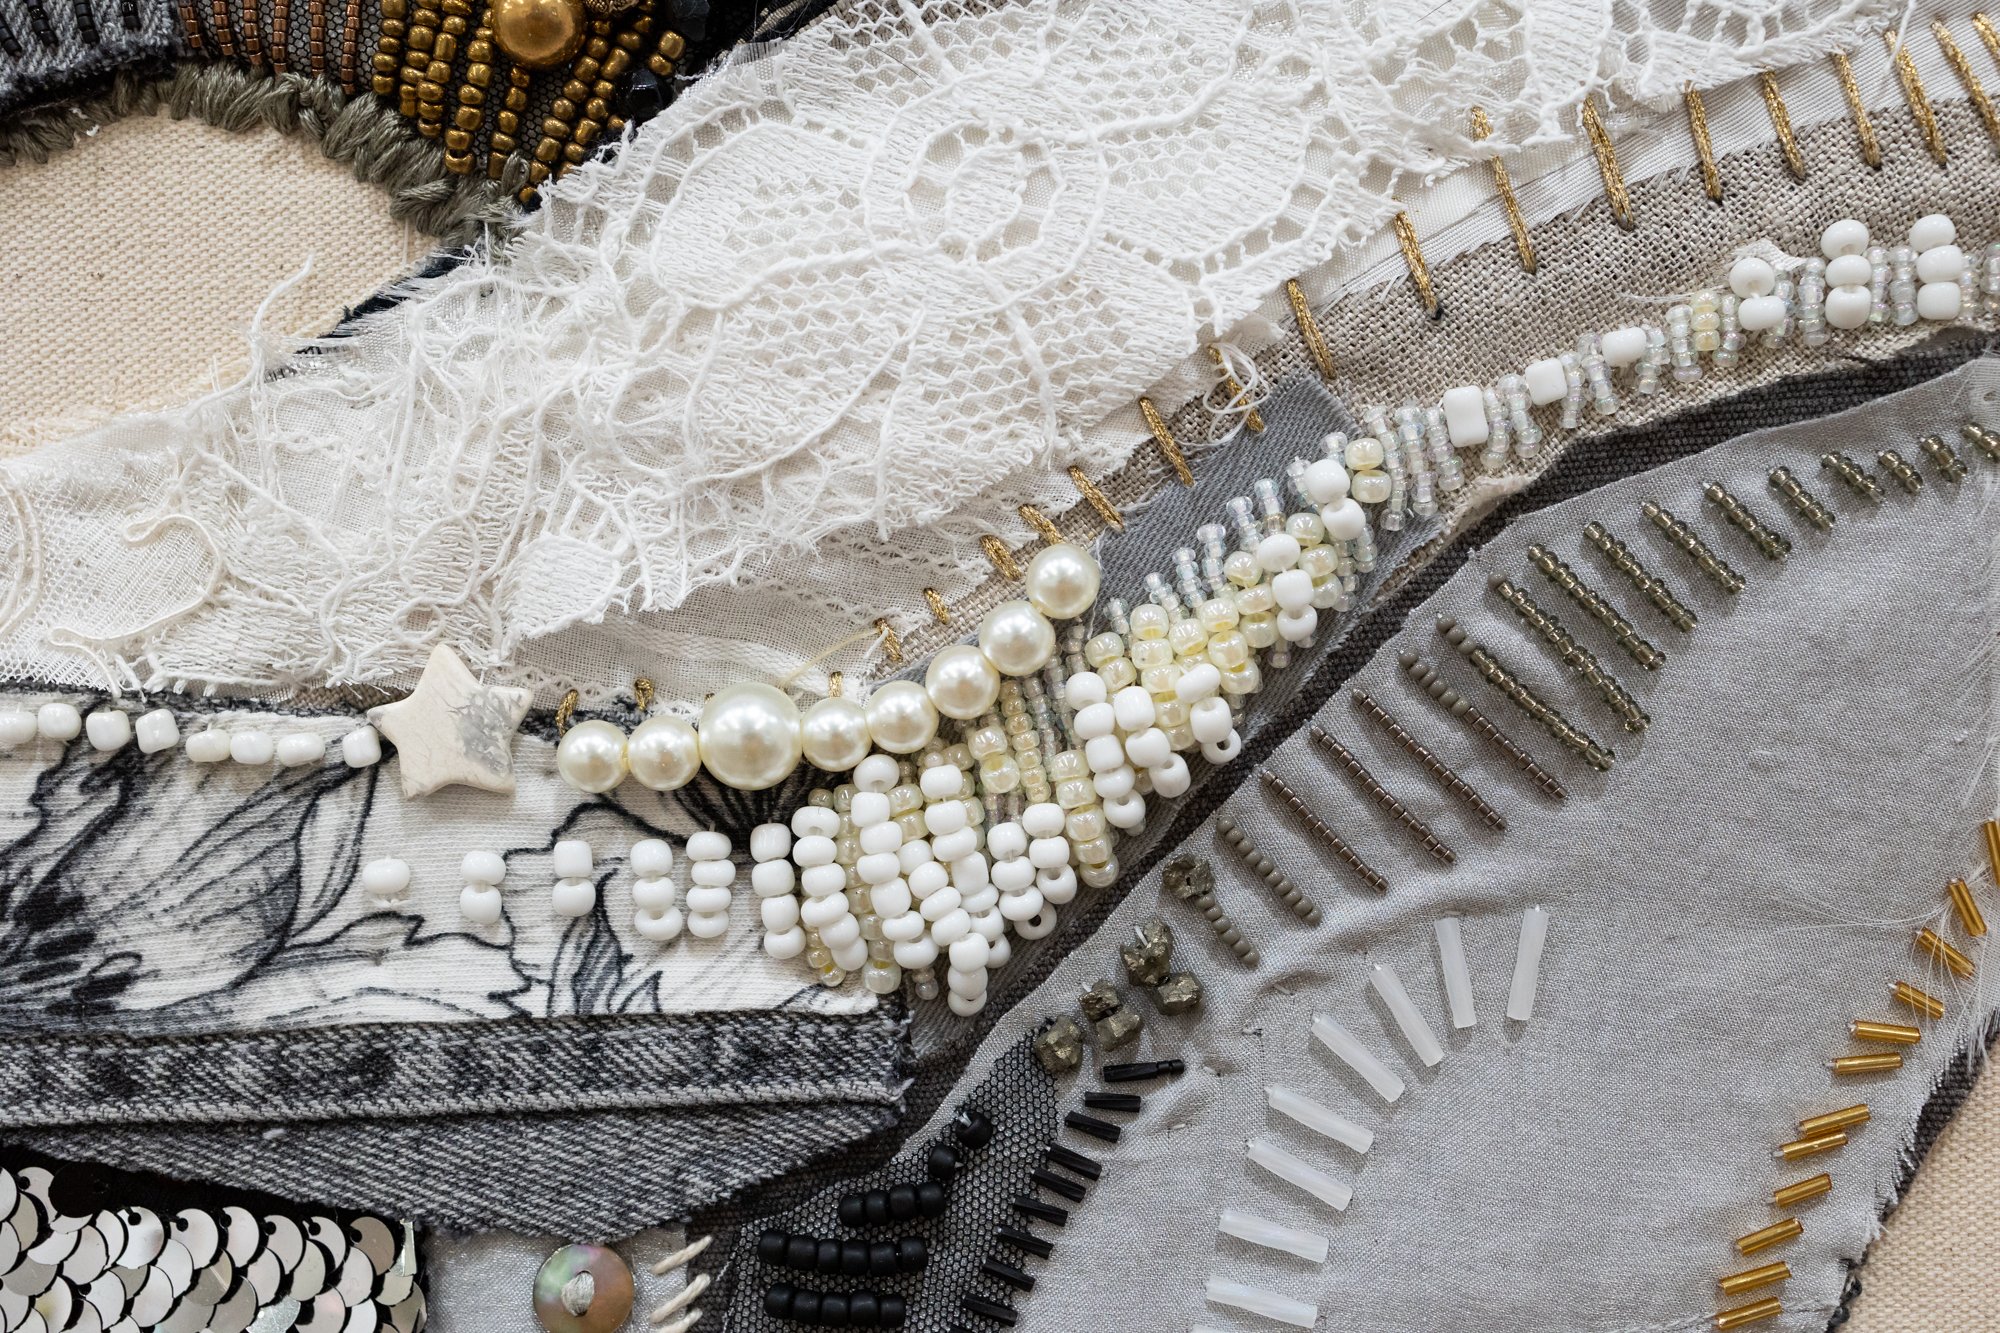 "Anatomy of a Wedding Dress" Mixed Media Textile Artwork by Mary Lacy @ Soapbox Arts Gallery, Burlington, Vermont